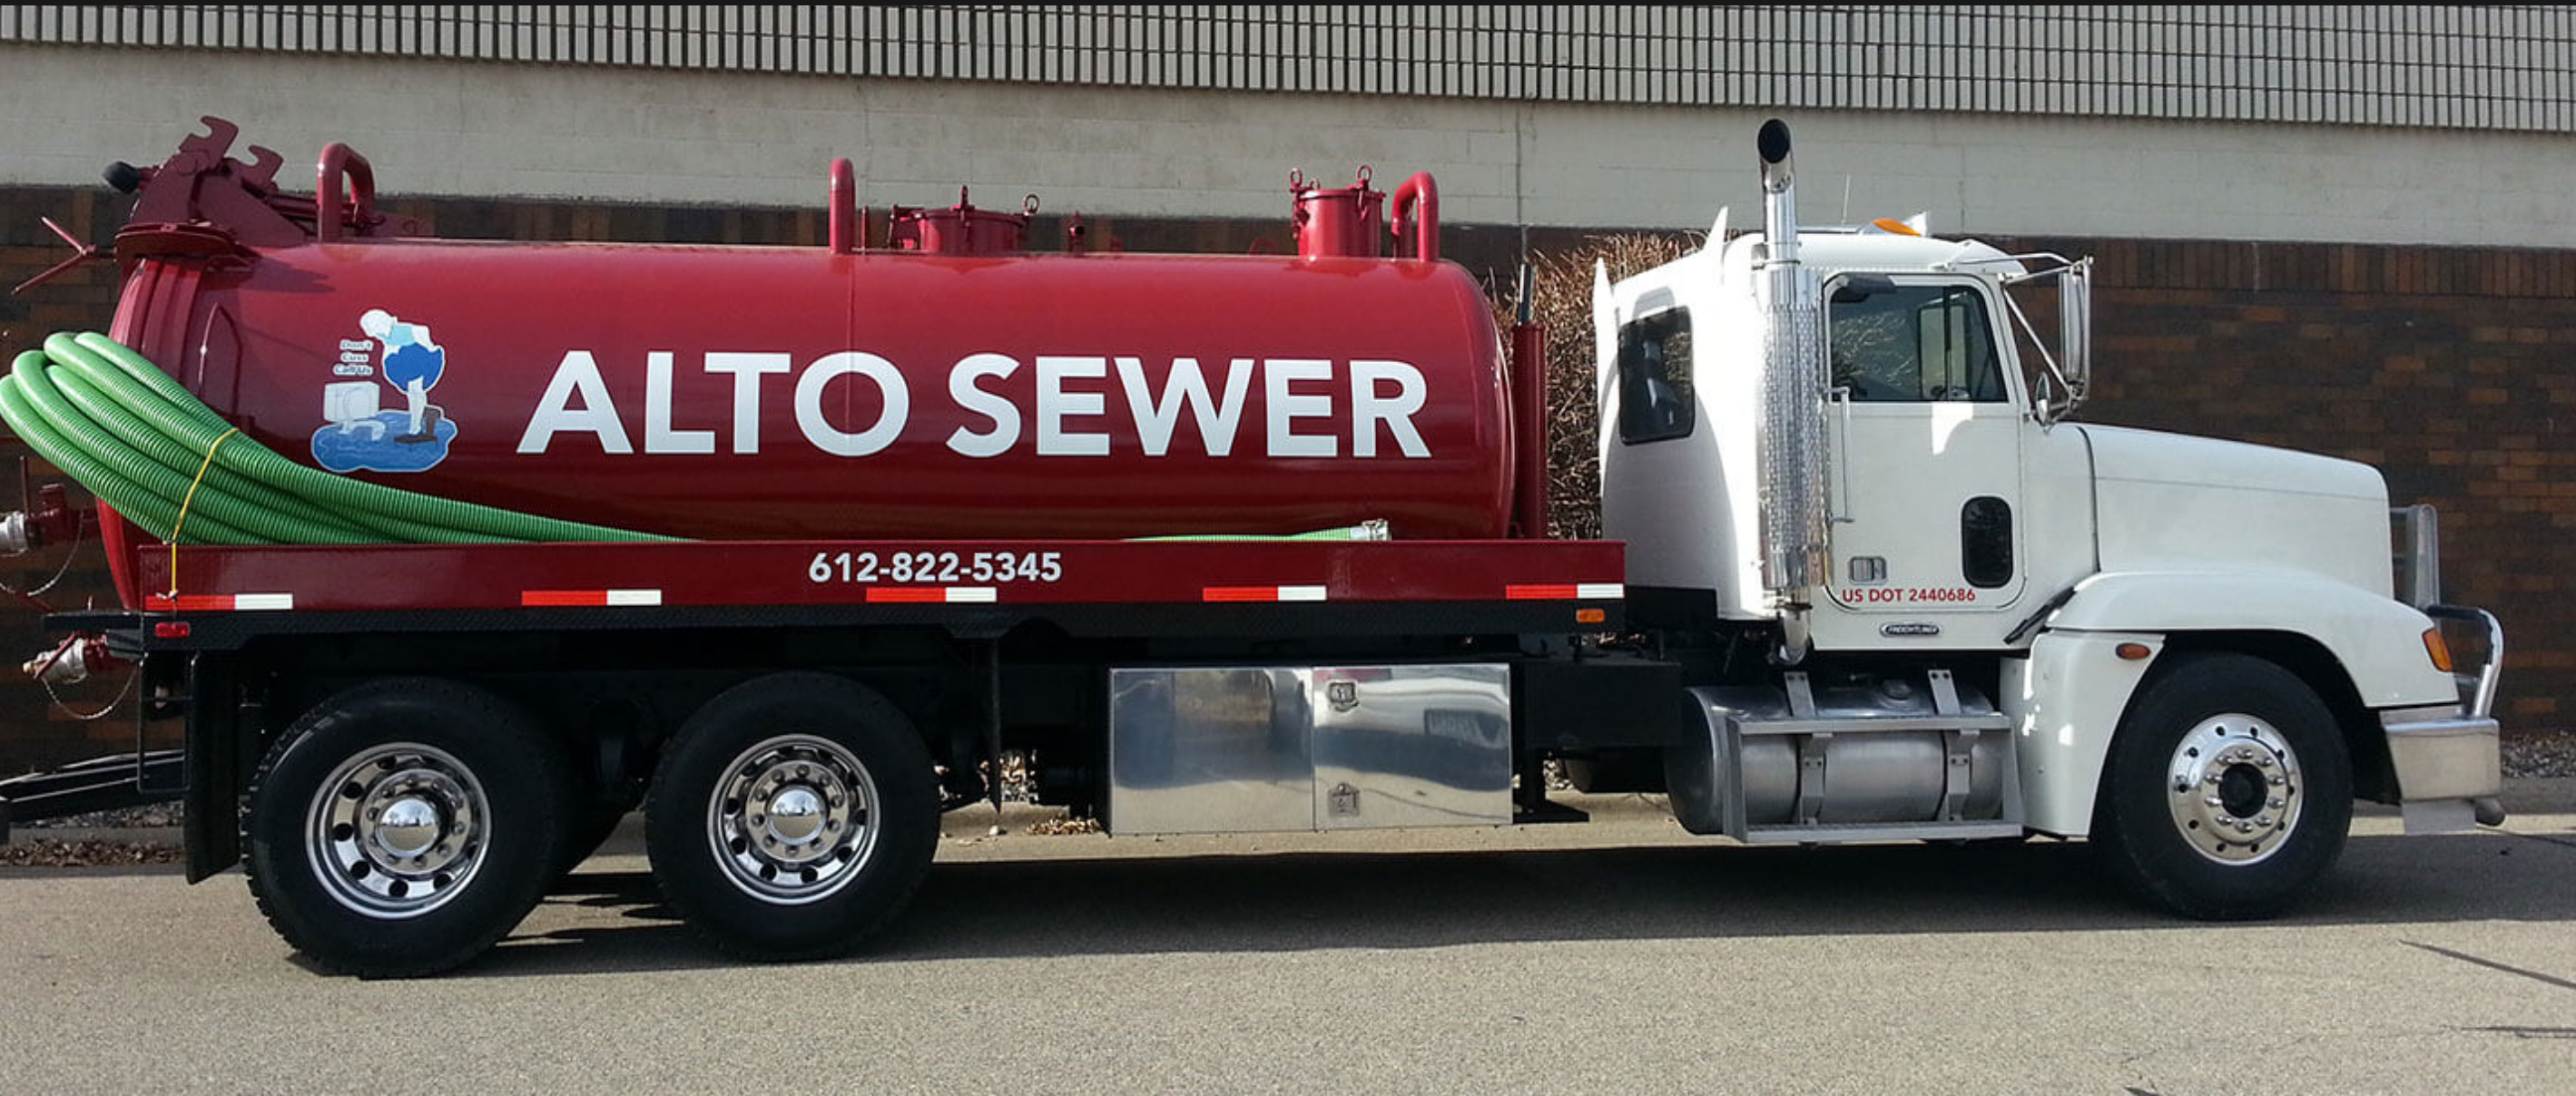 Alto Sewer Service Photo